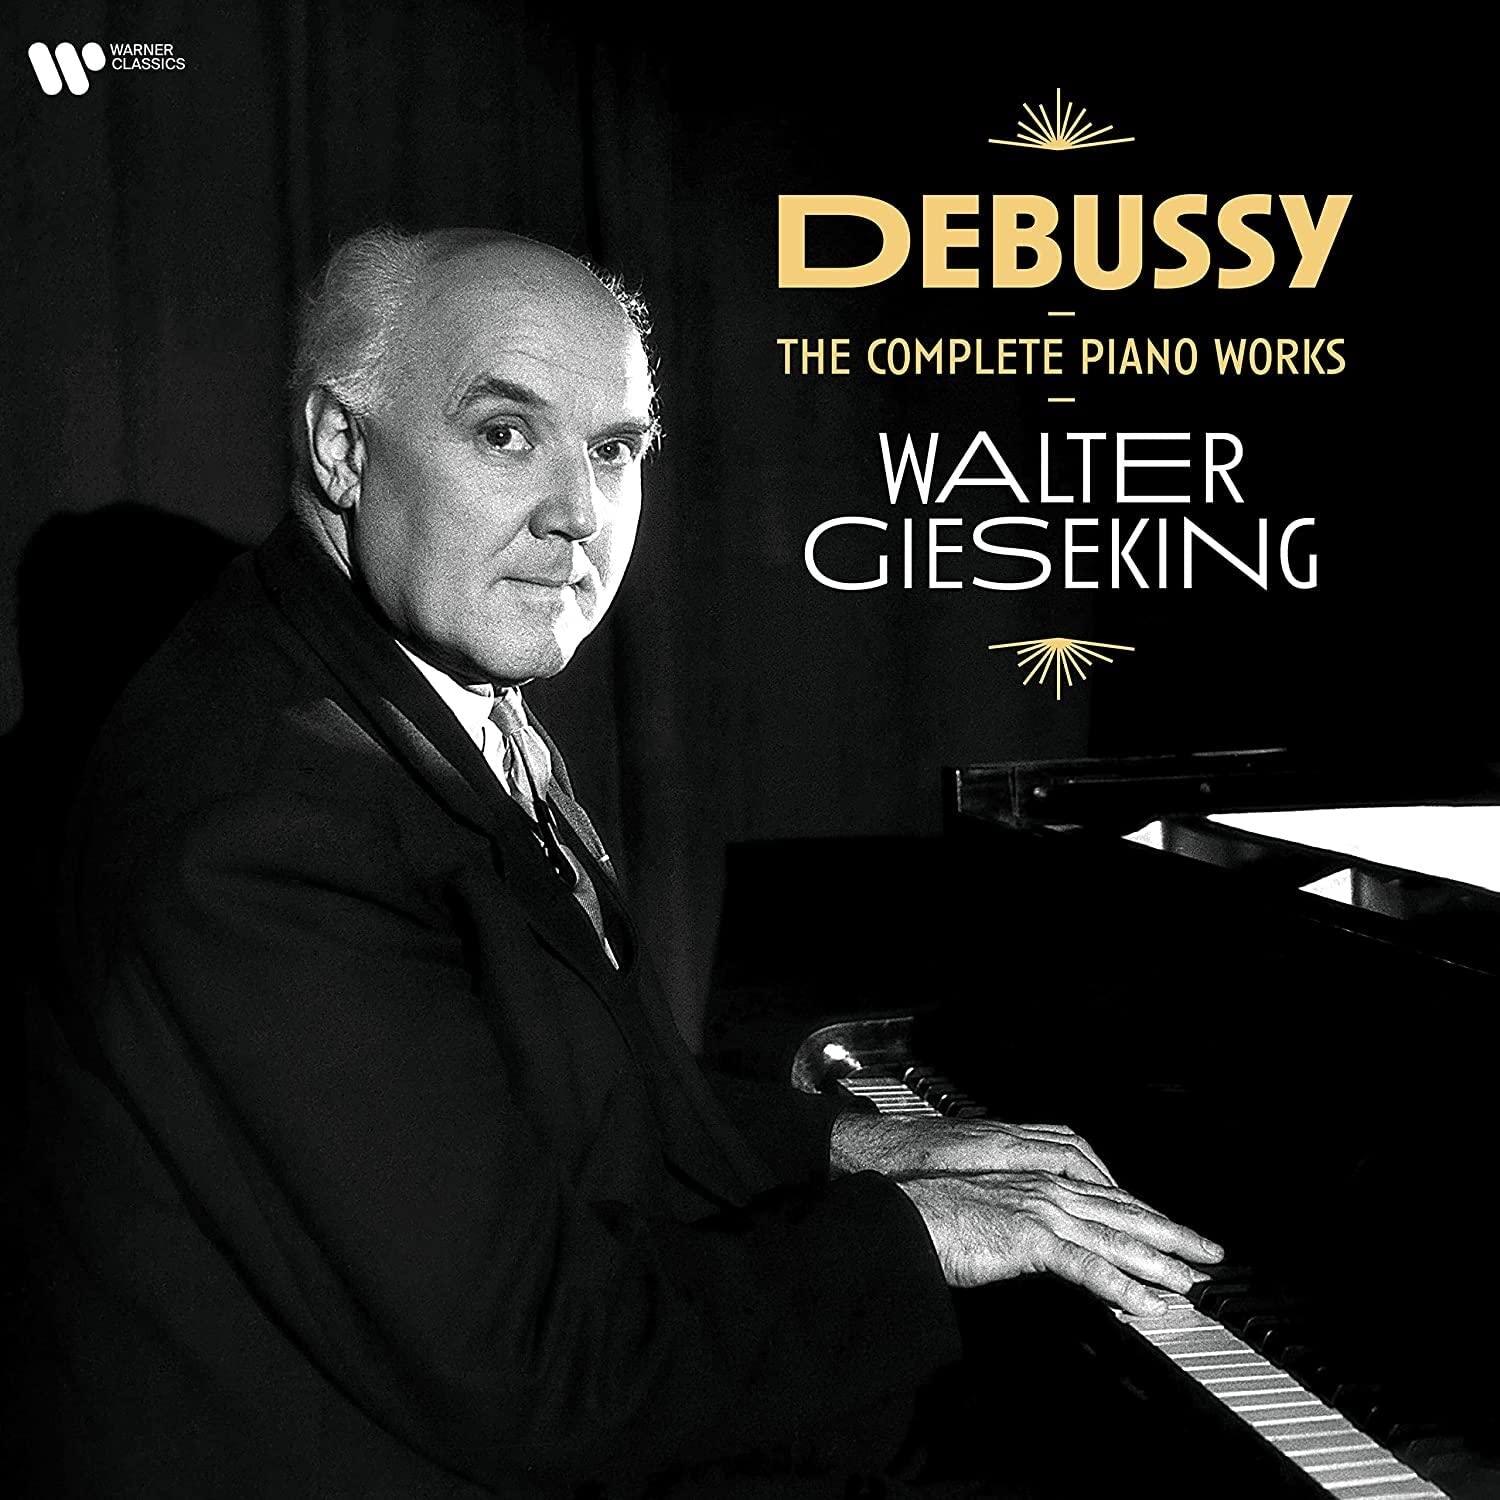 виниловая пластинка walter gieseking debussy the complete piano works 0190296280436 Виниловая Пластинка Walter Gieseking, Debussy: The Complete Piano Works (0190296280436)